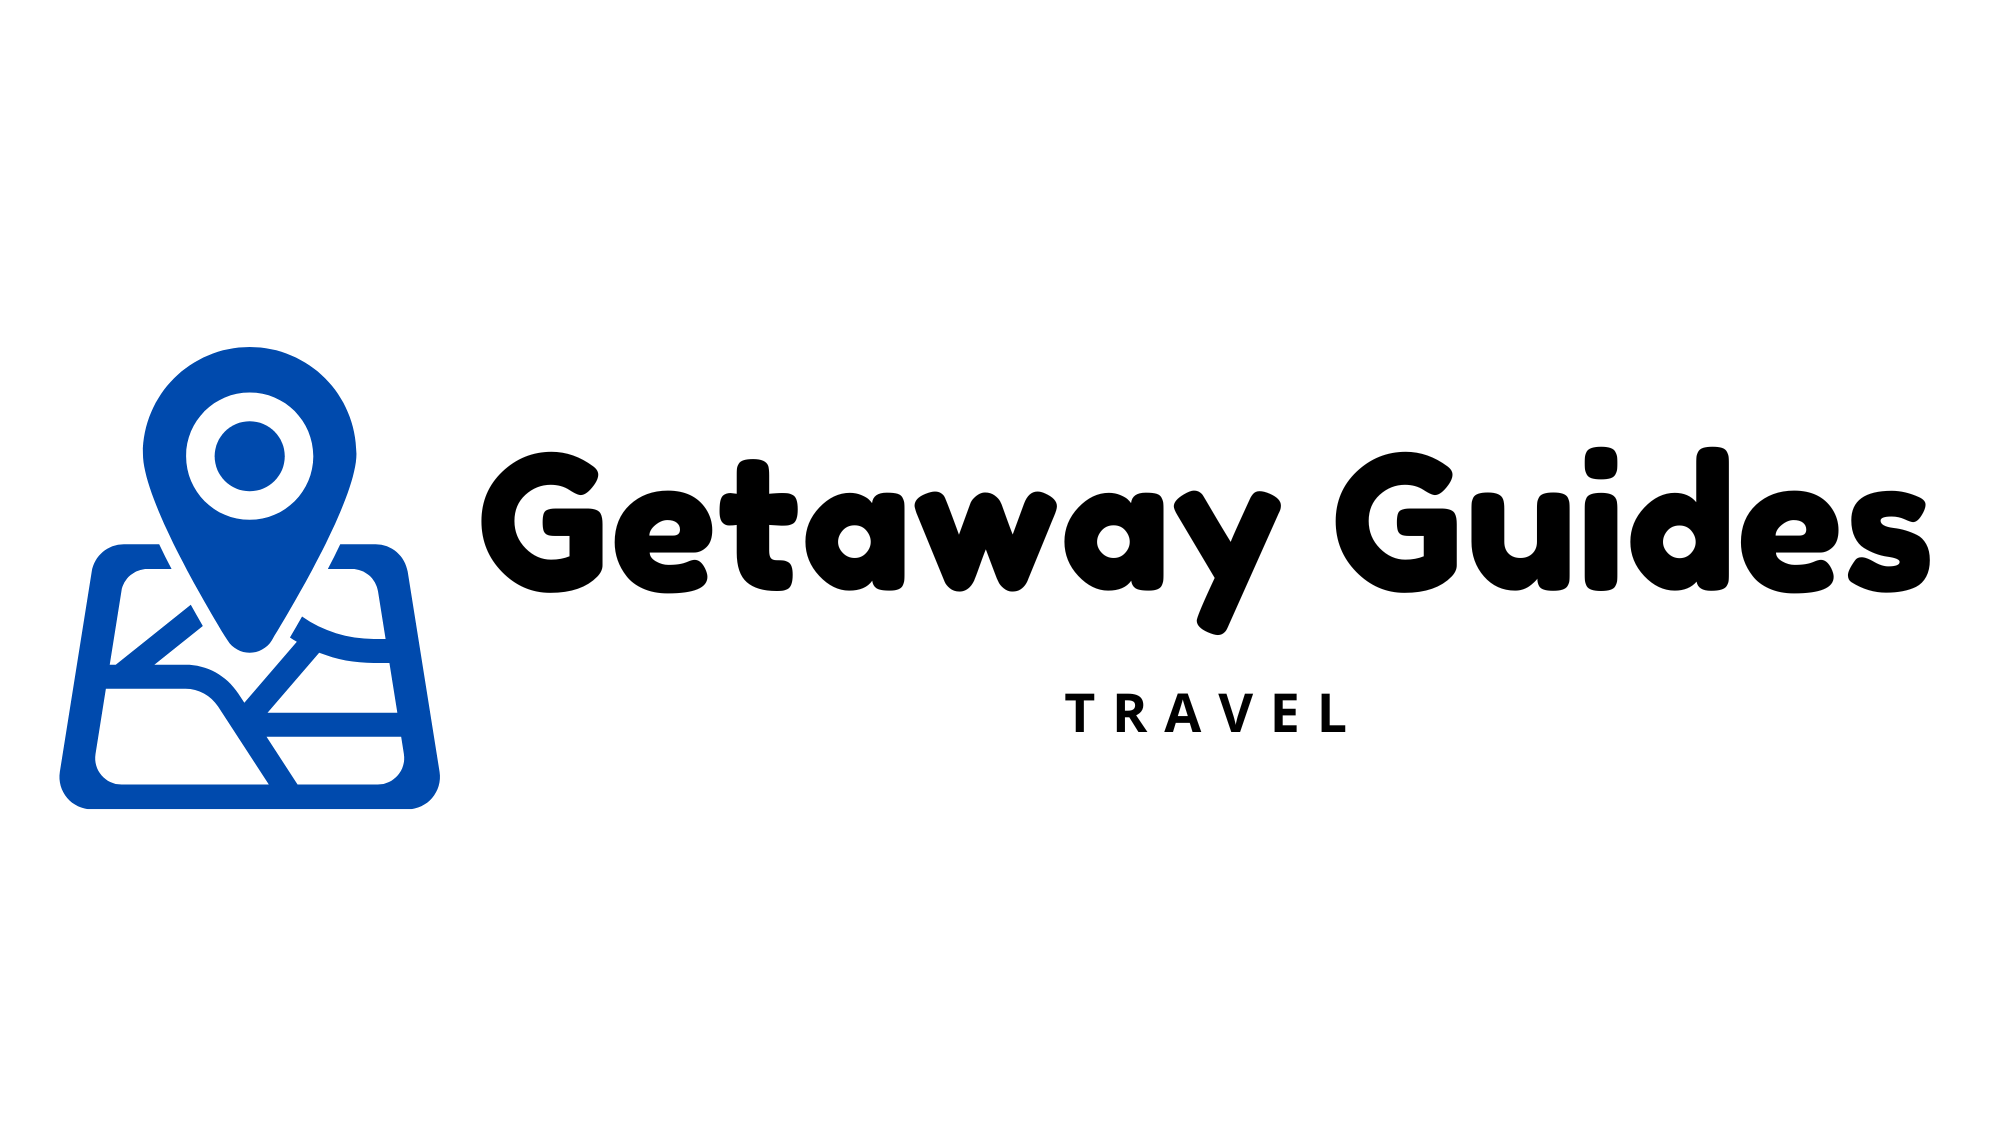 Getaway Guides Travel